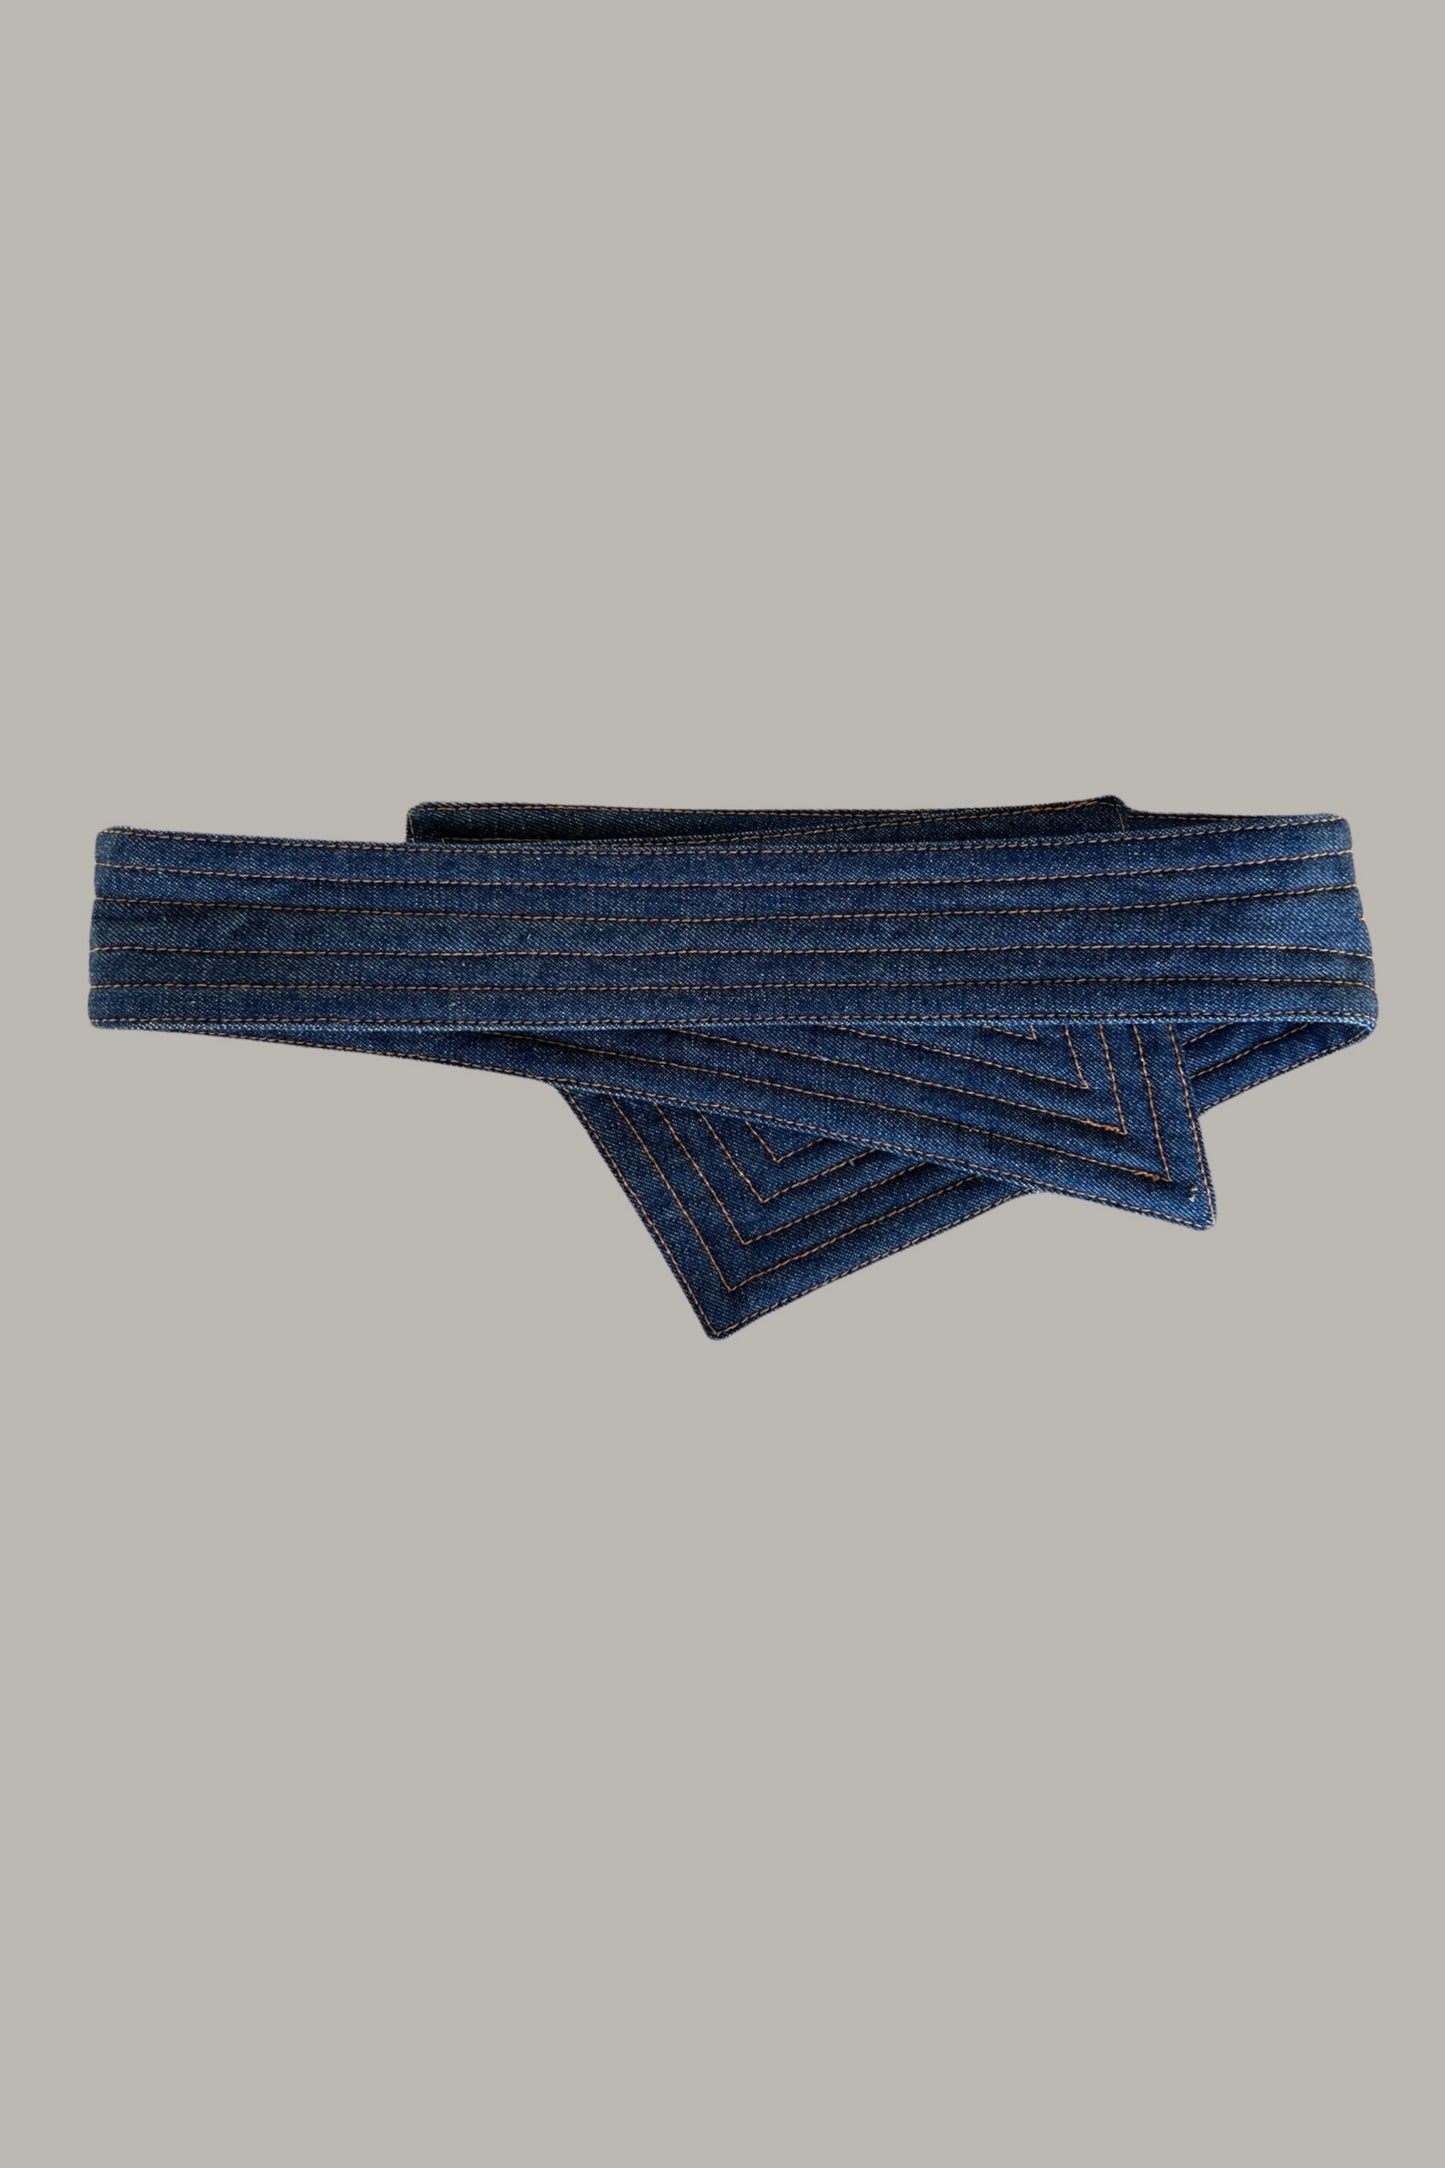 Envelope Flat Front Indigo Dark Denim Jeans {Made to Order}